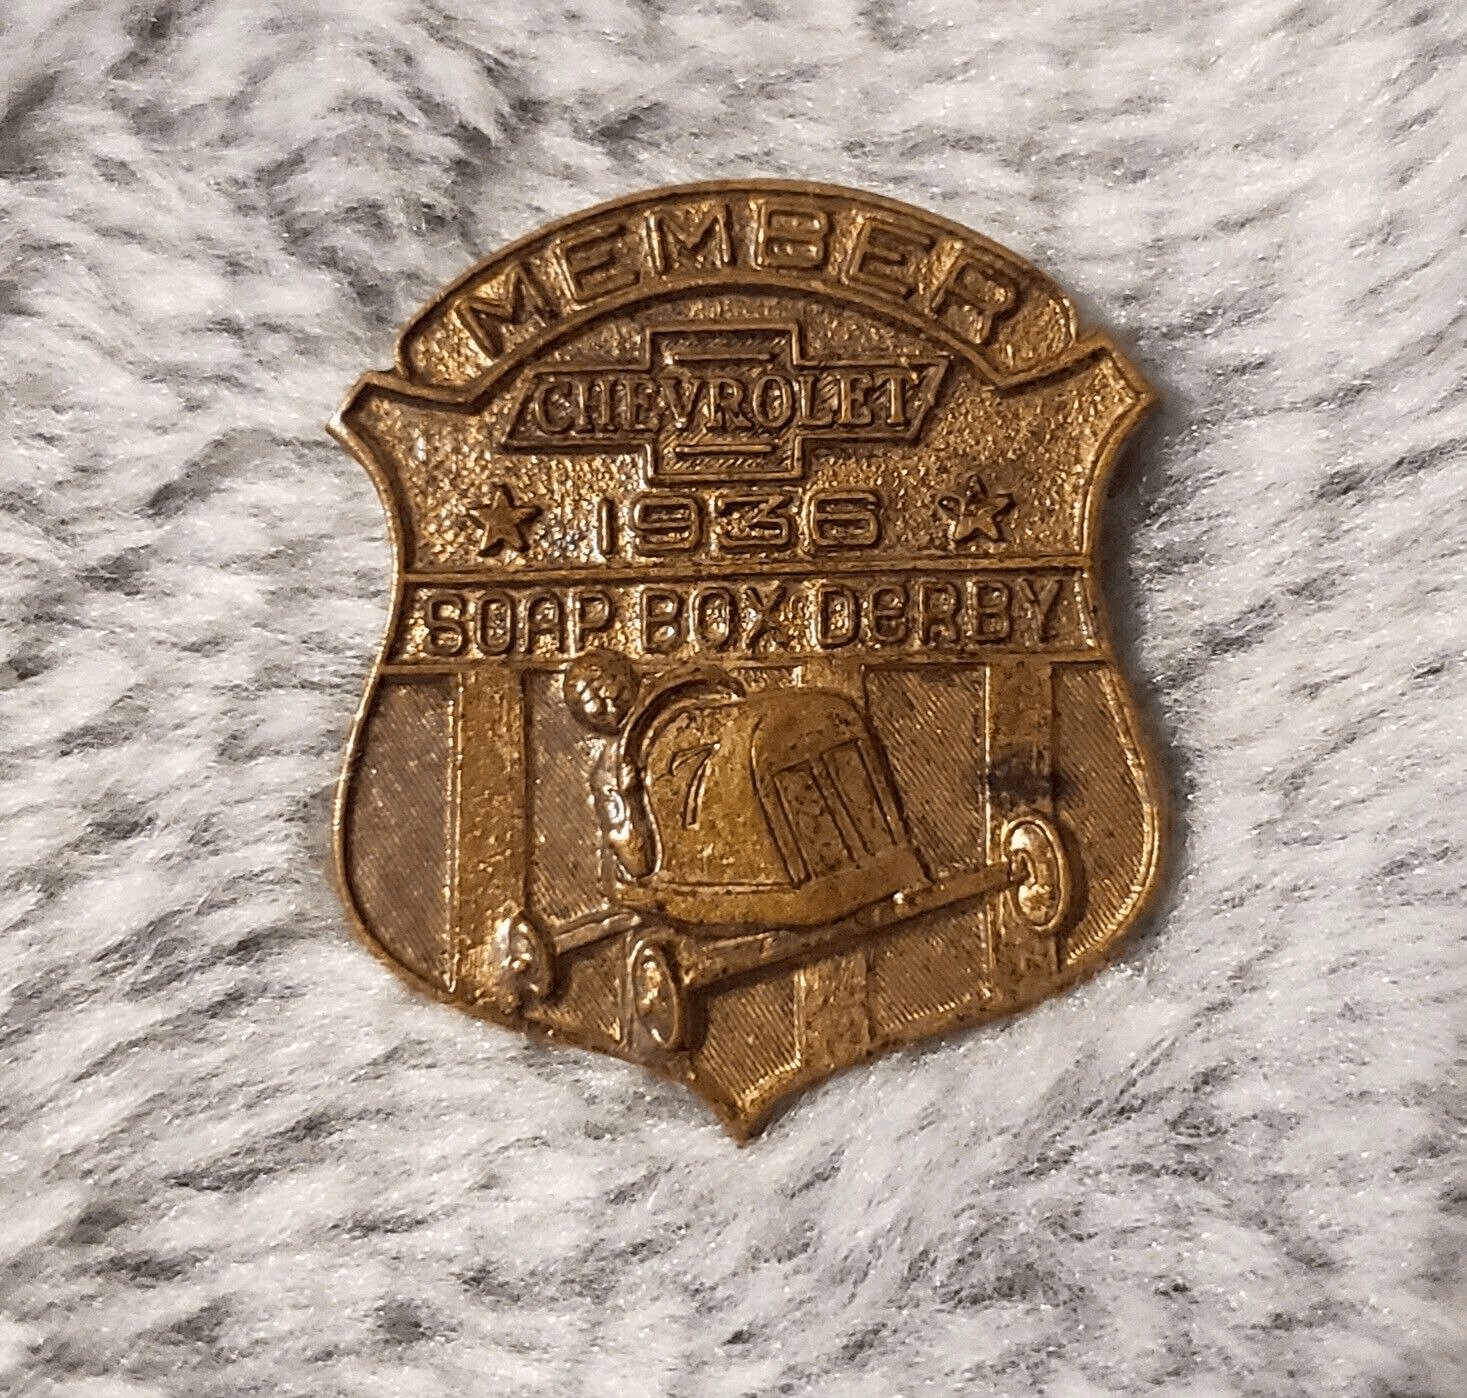 Antique 1936 chevrolet soap box derby member pin